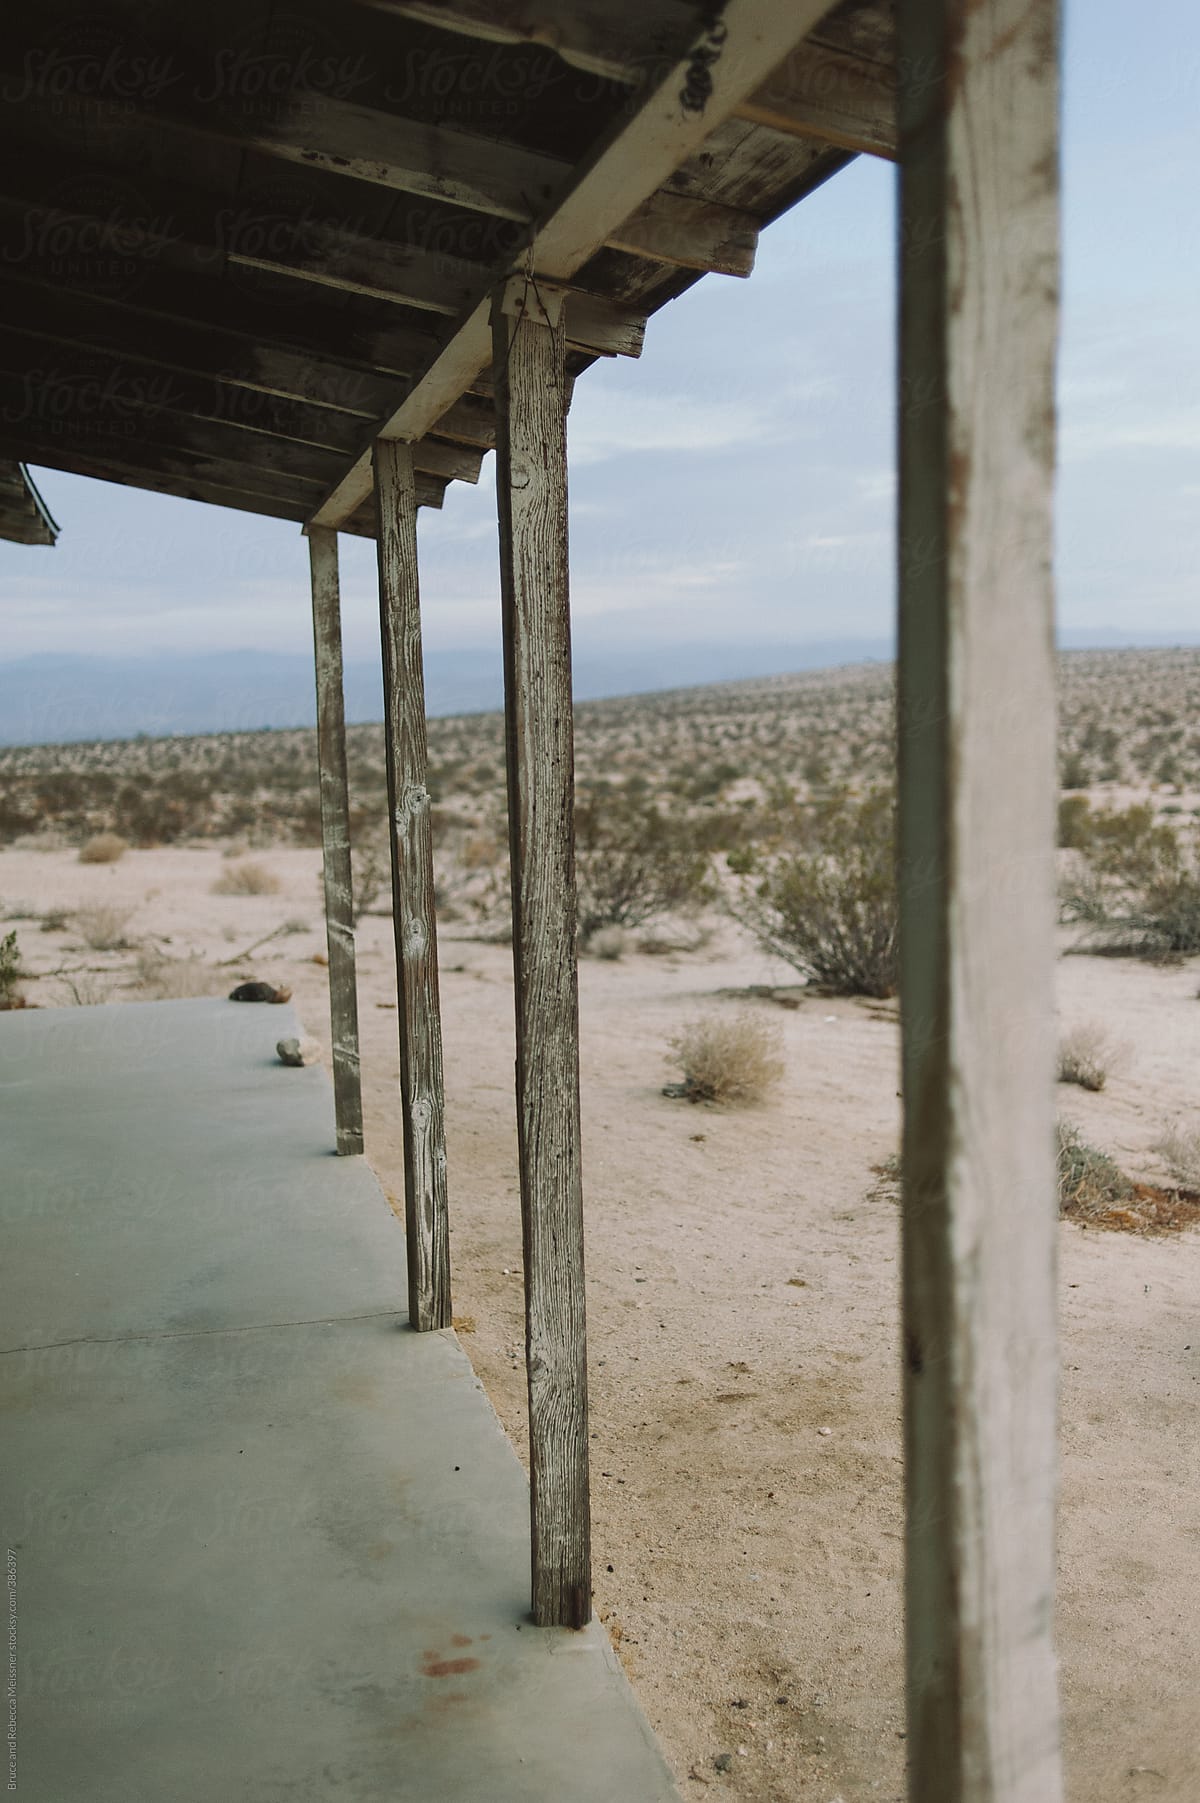 Porch in the Desert